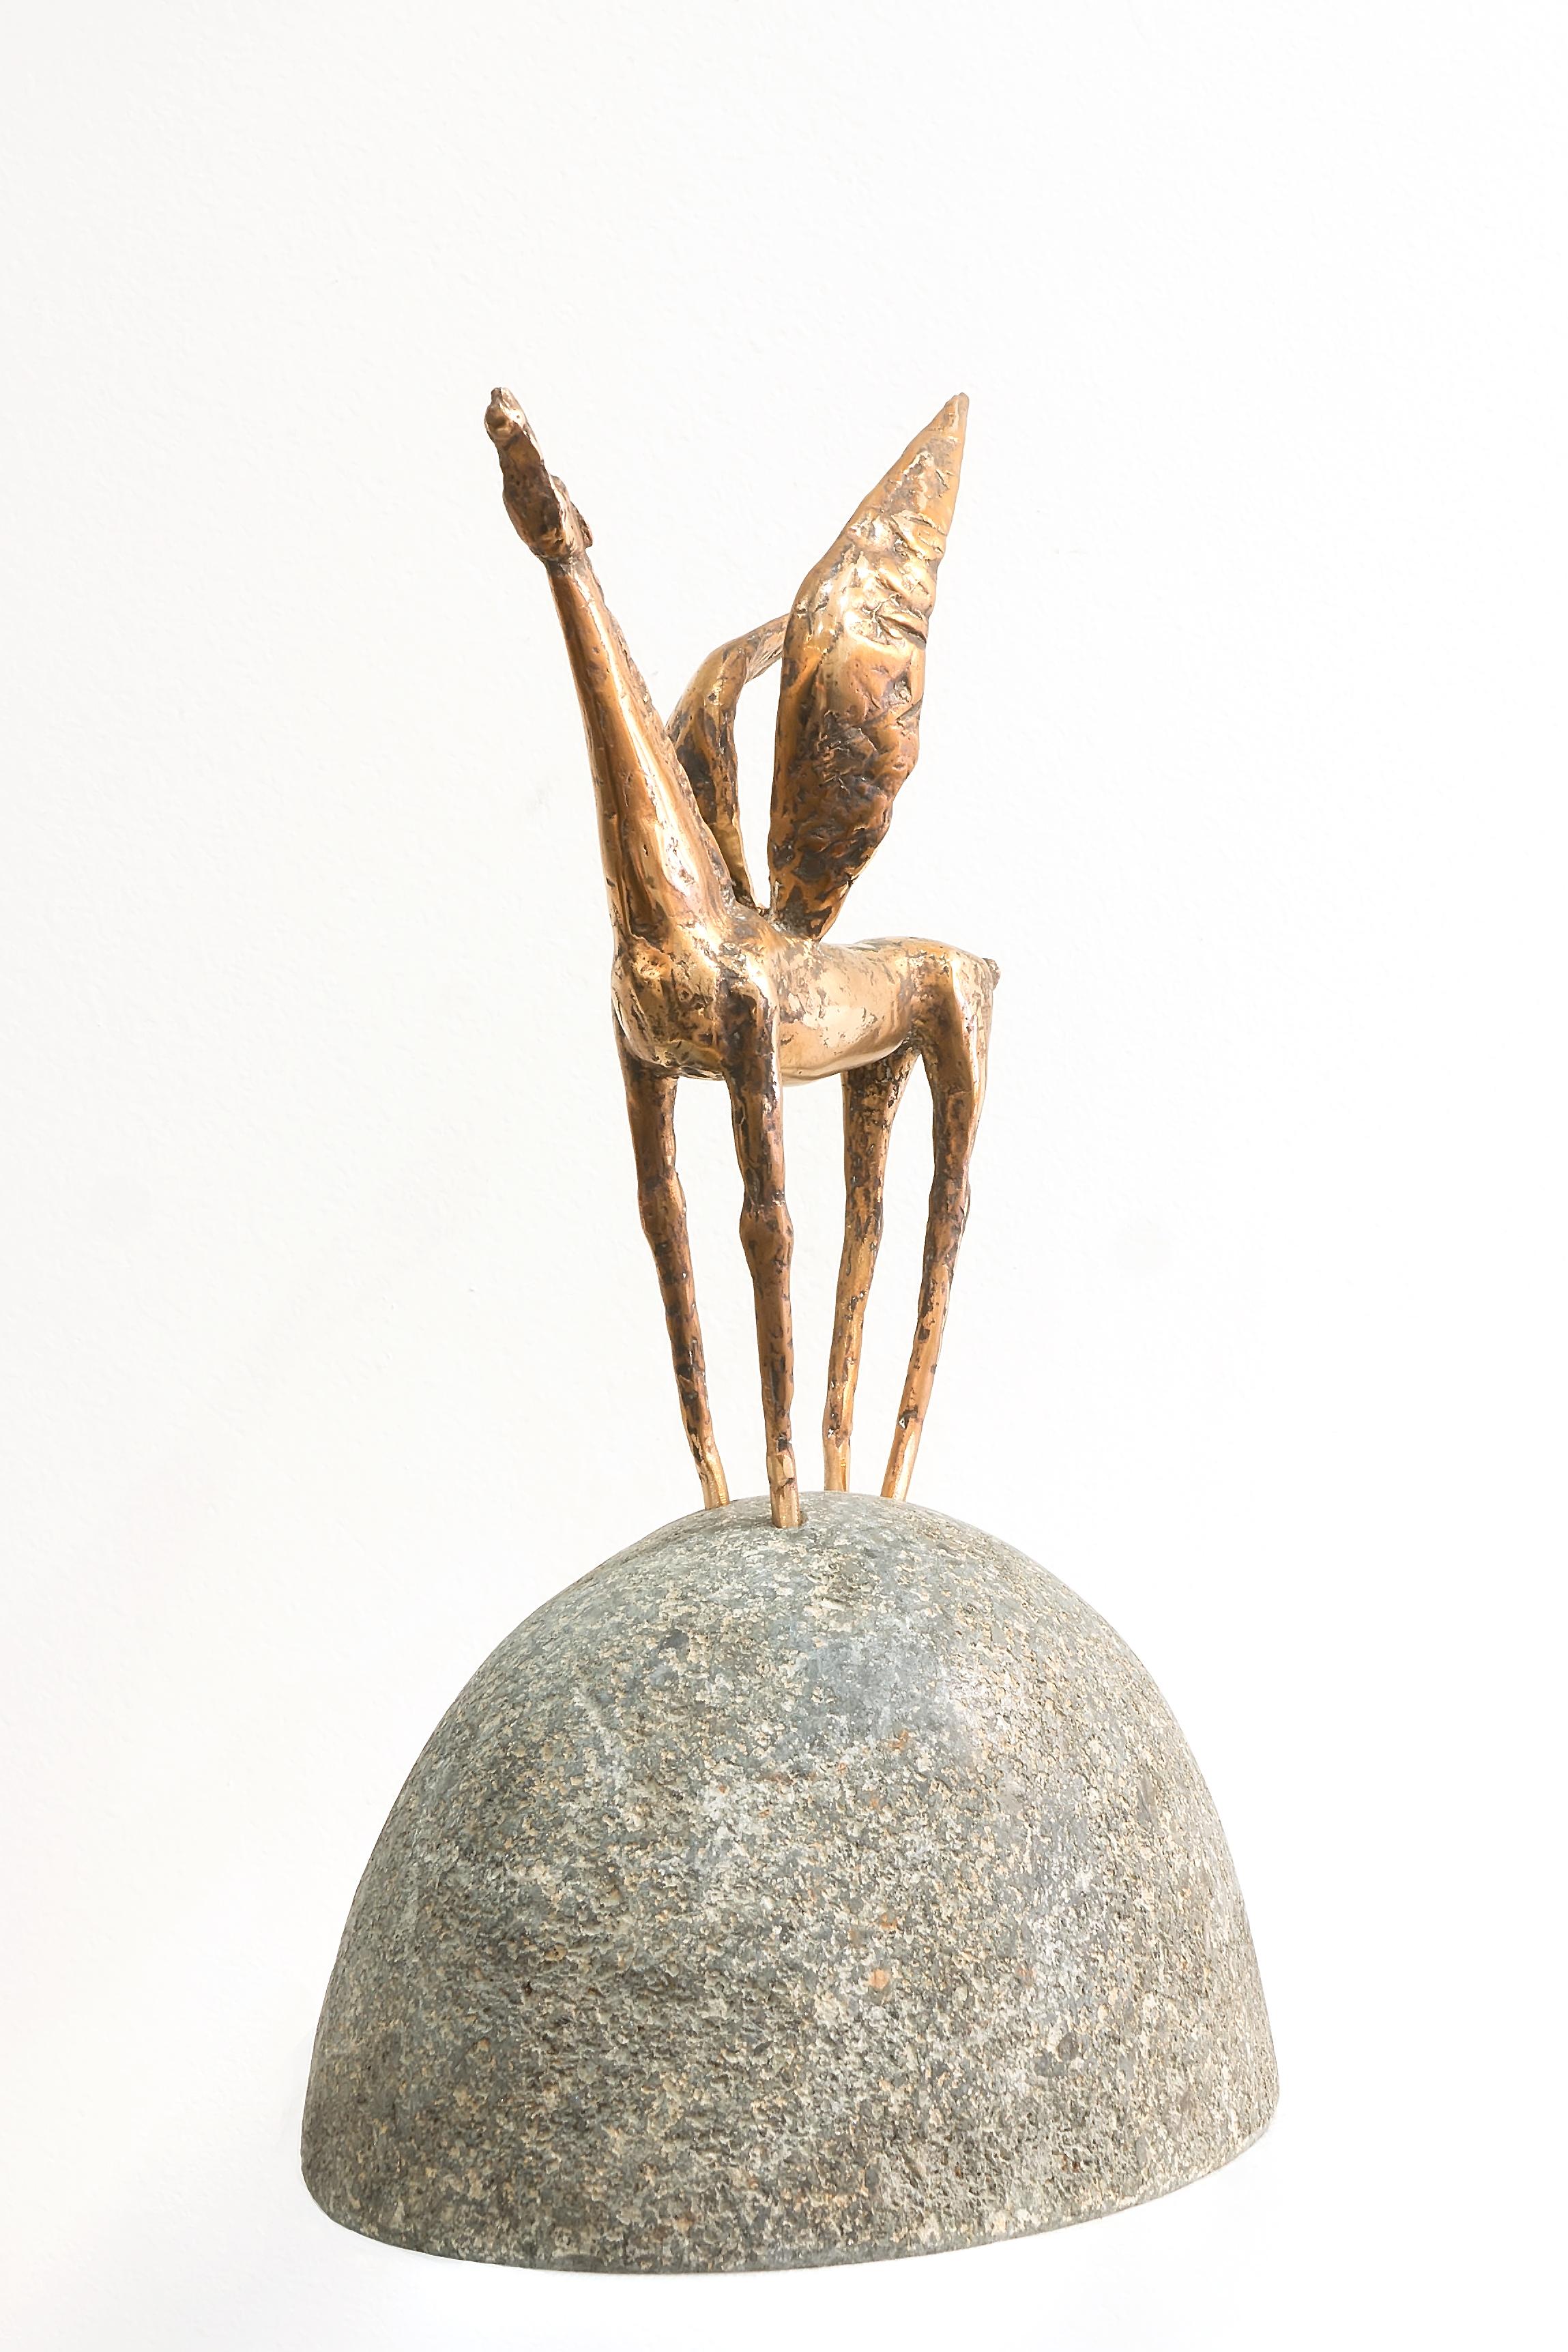 Pegasus (Moderne), Sculpture, von Stasys Zirgulis